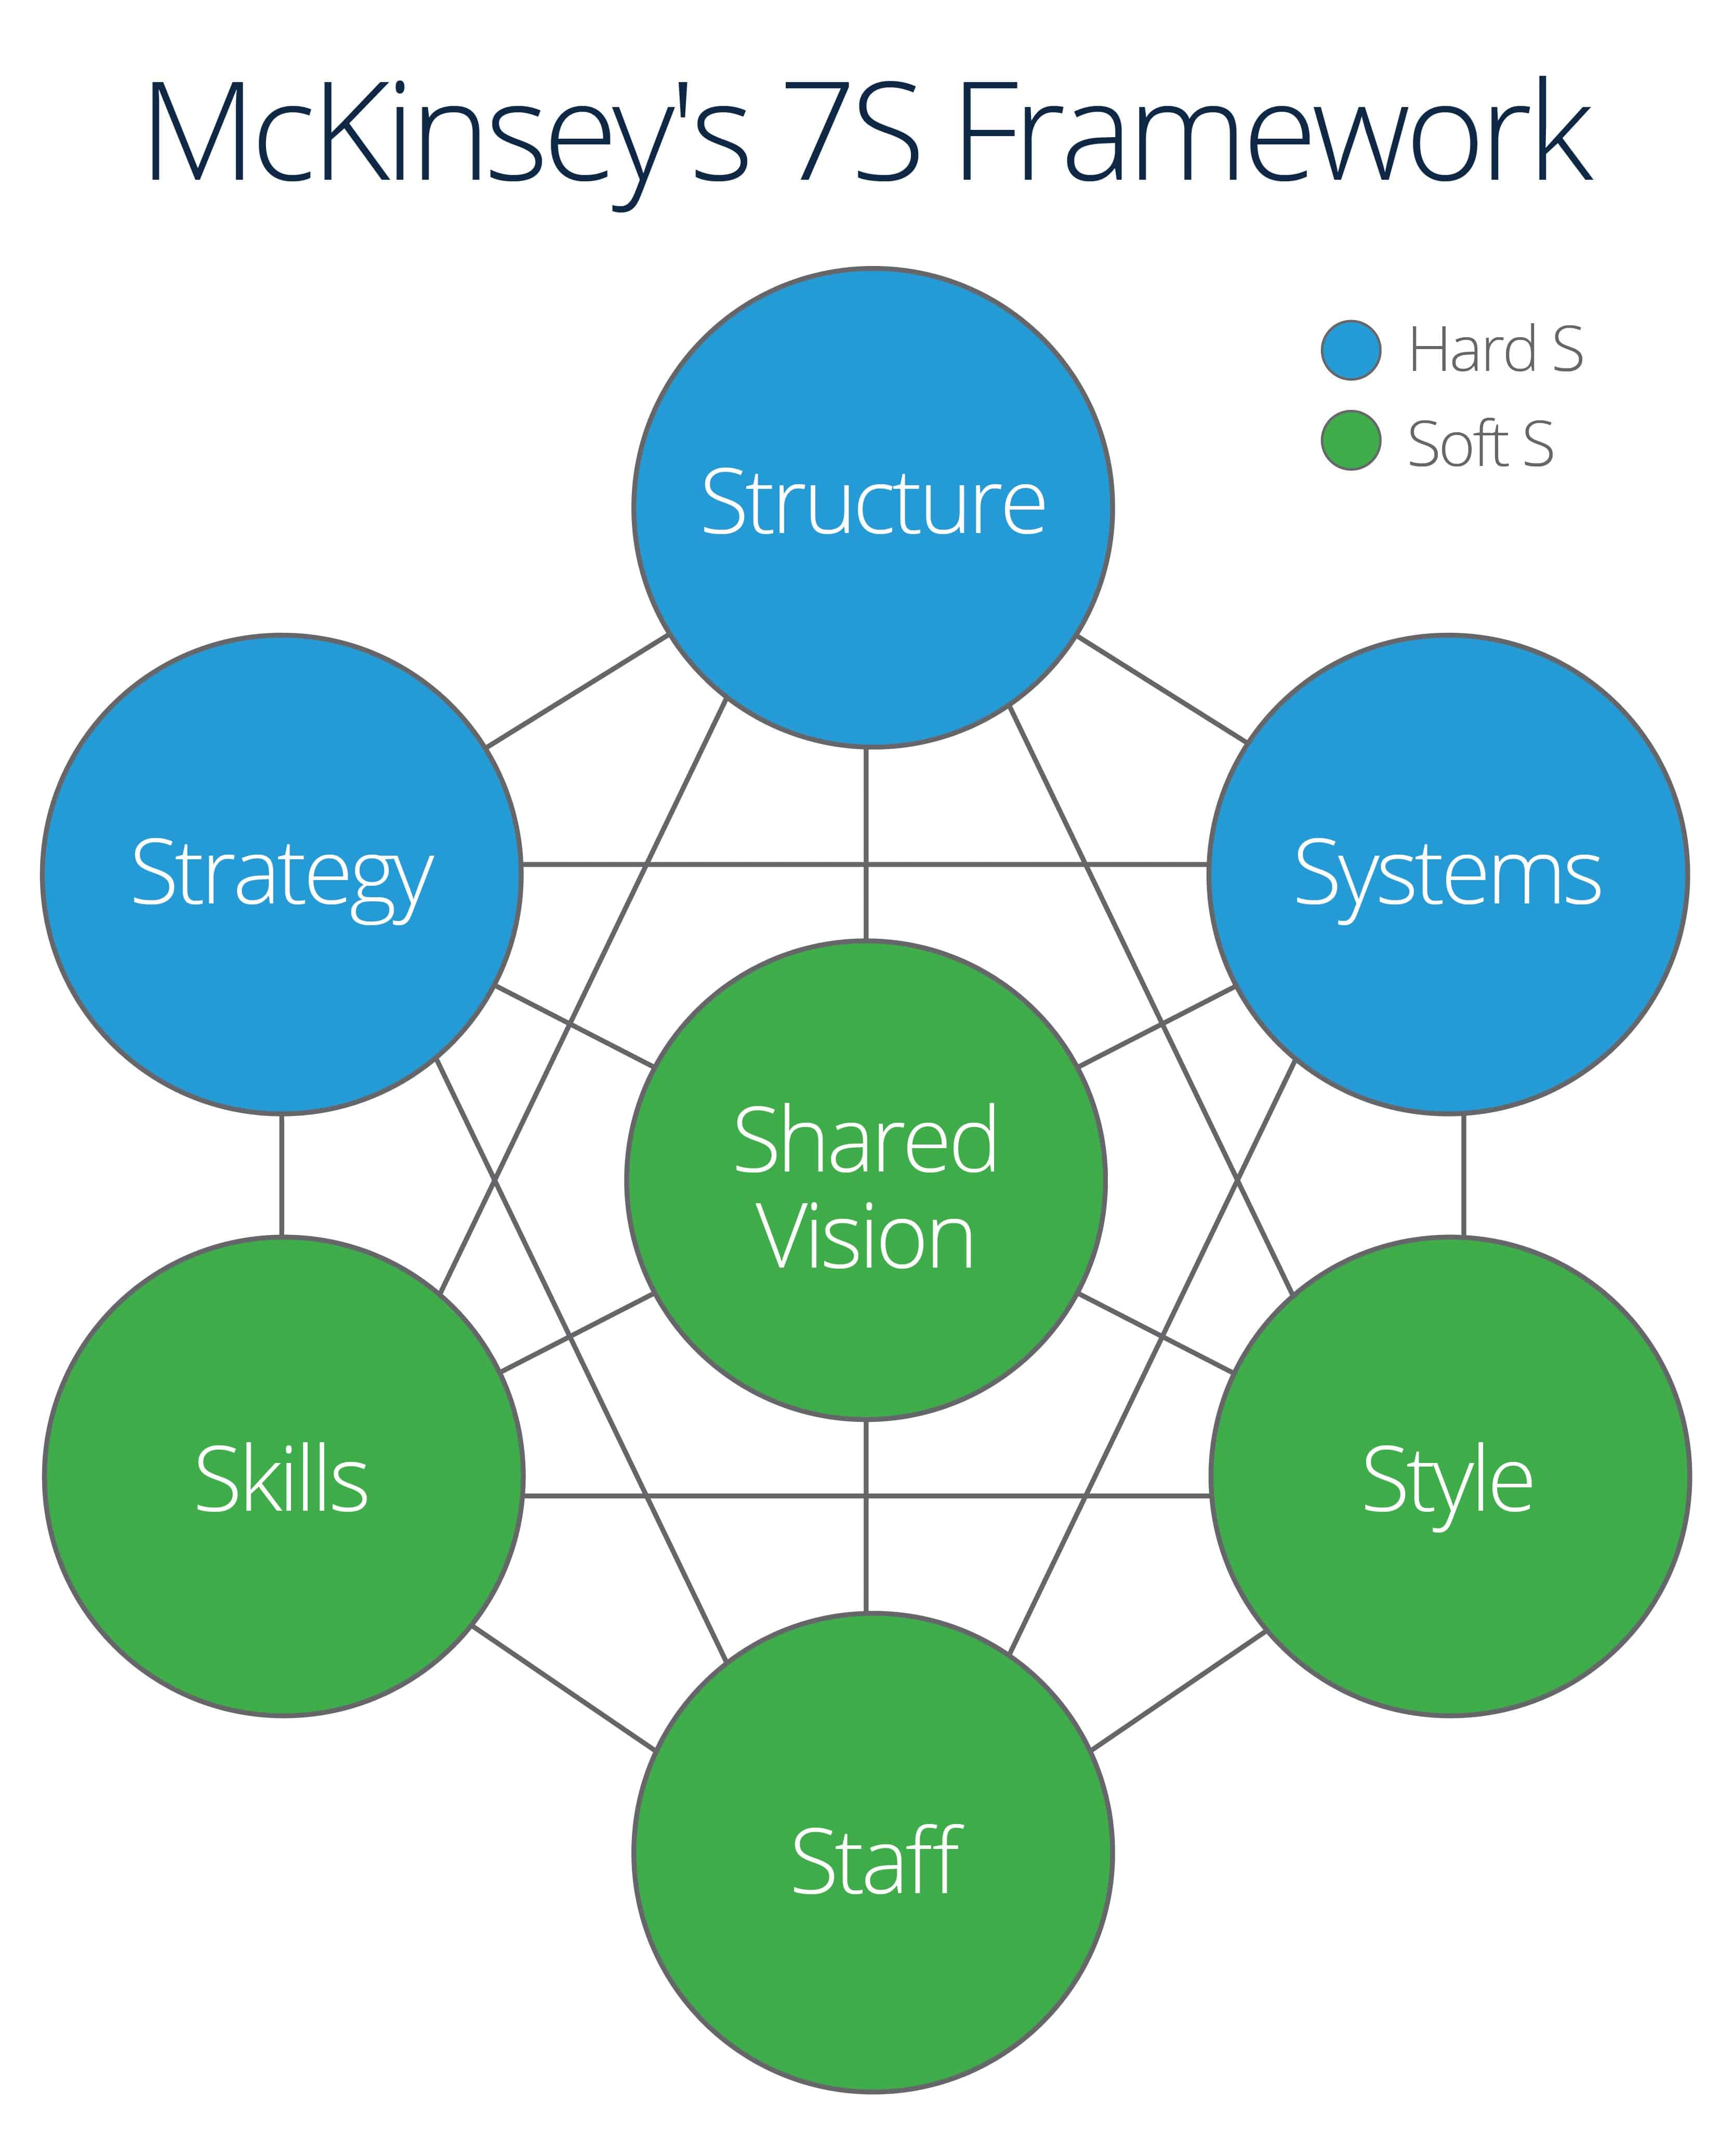 The McKinsey 7S Framework